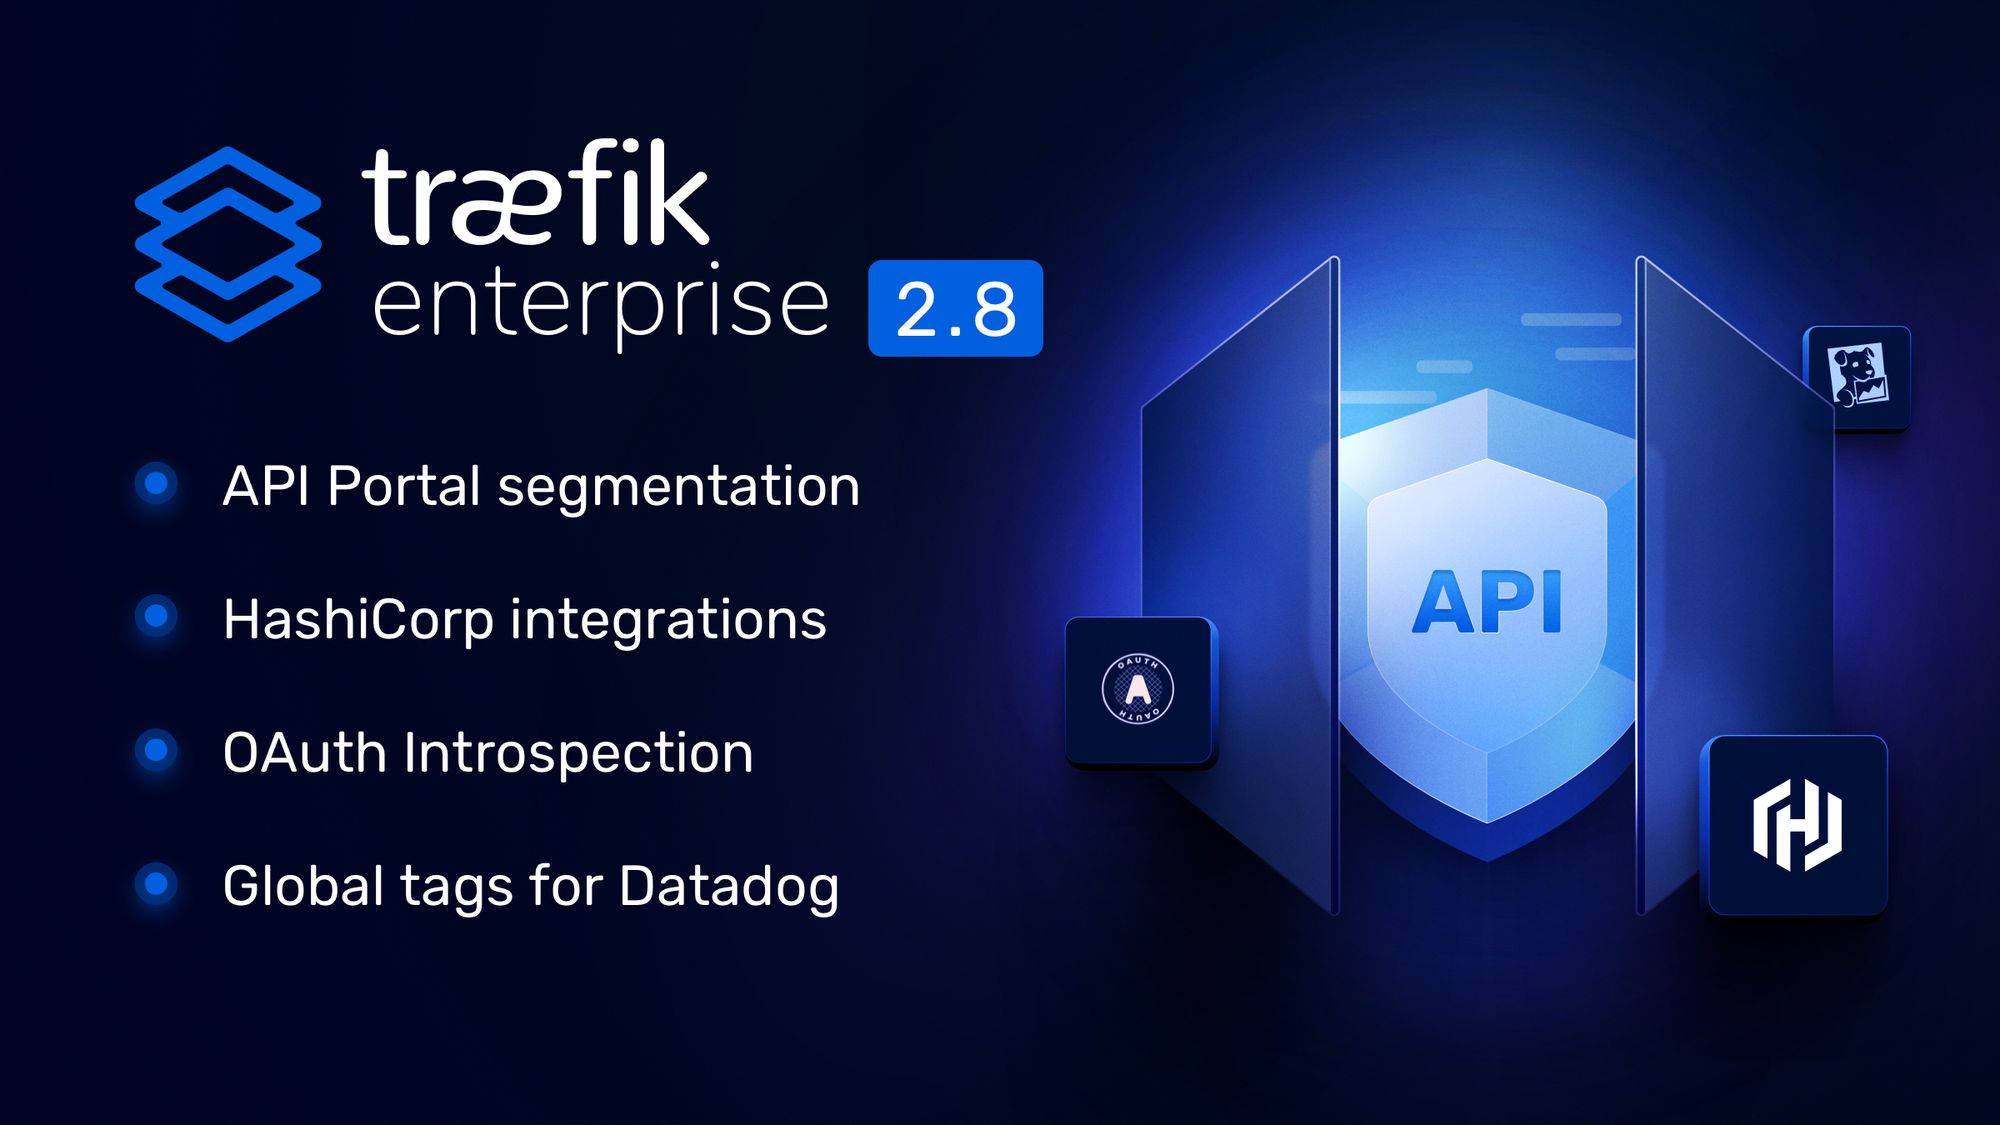 traefik enterprise 2.8 announcement